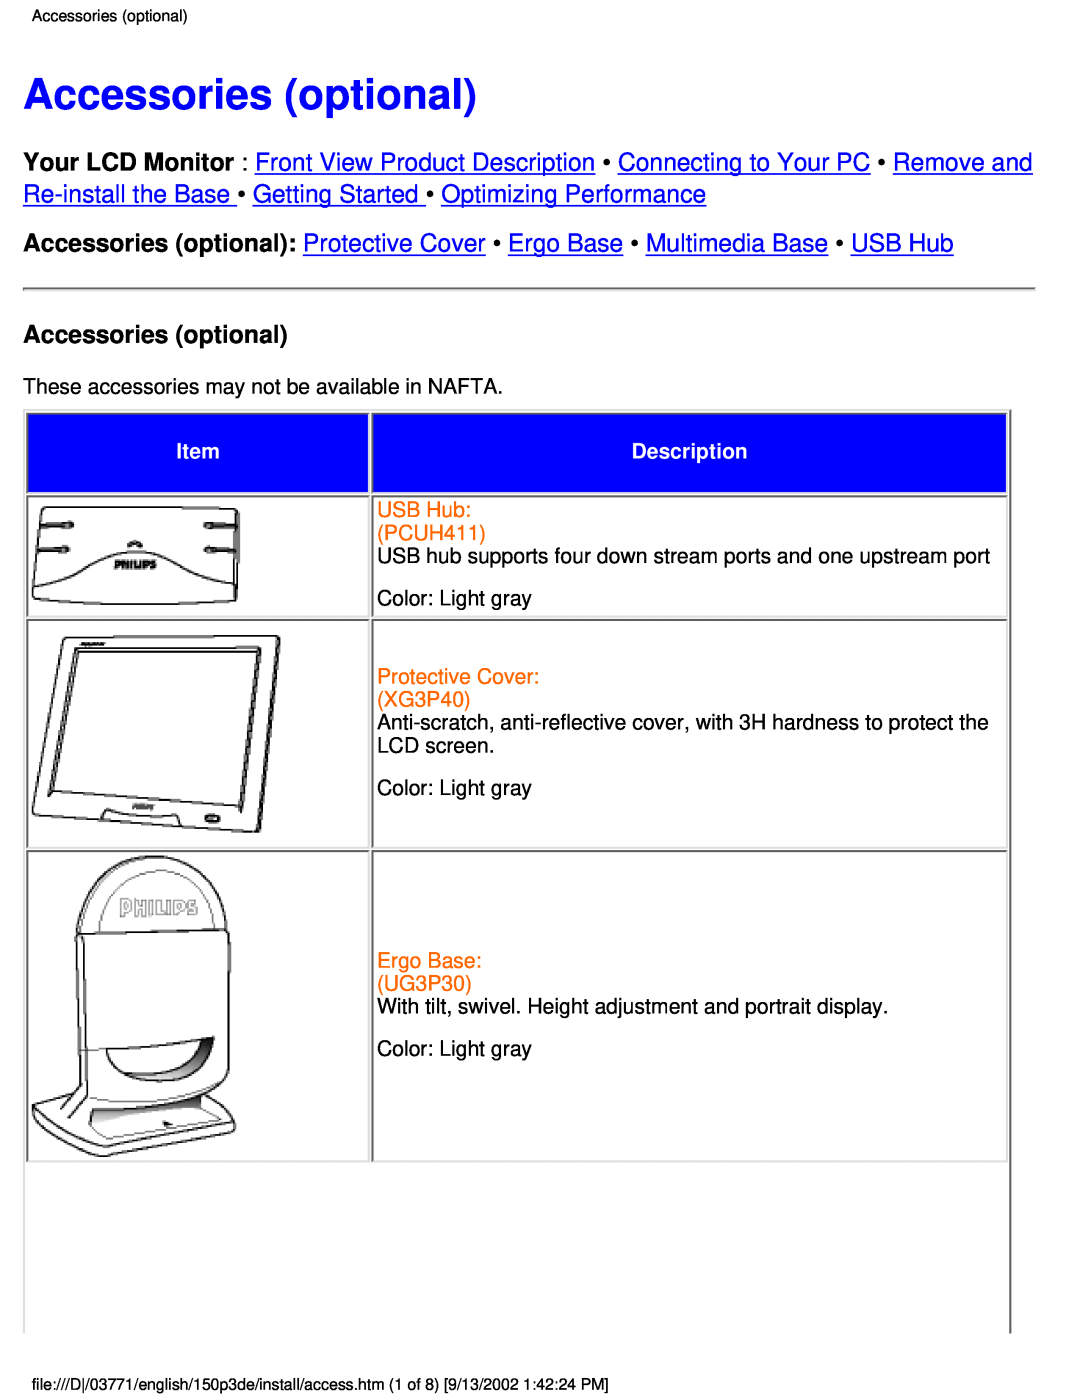 Philips 150P3E user manual Accessories optional 